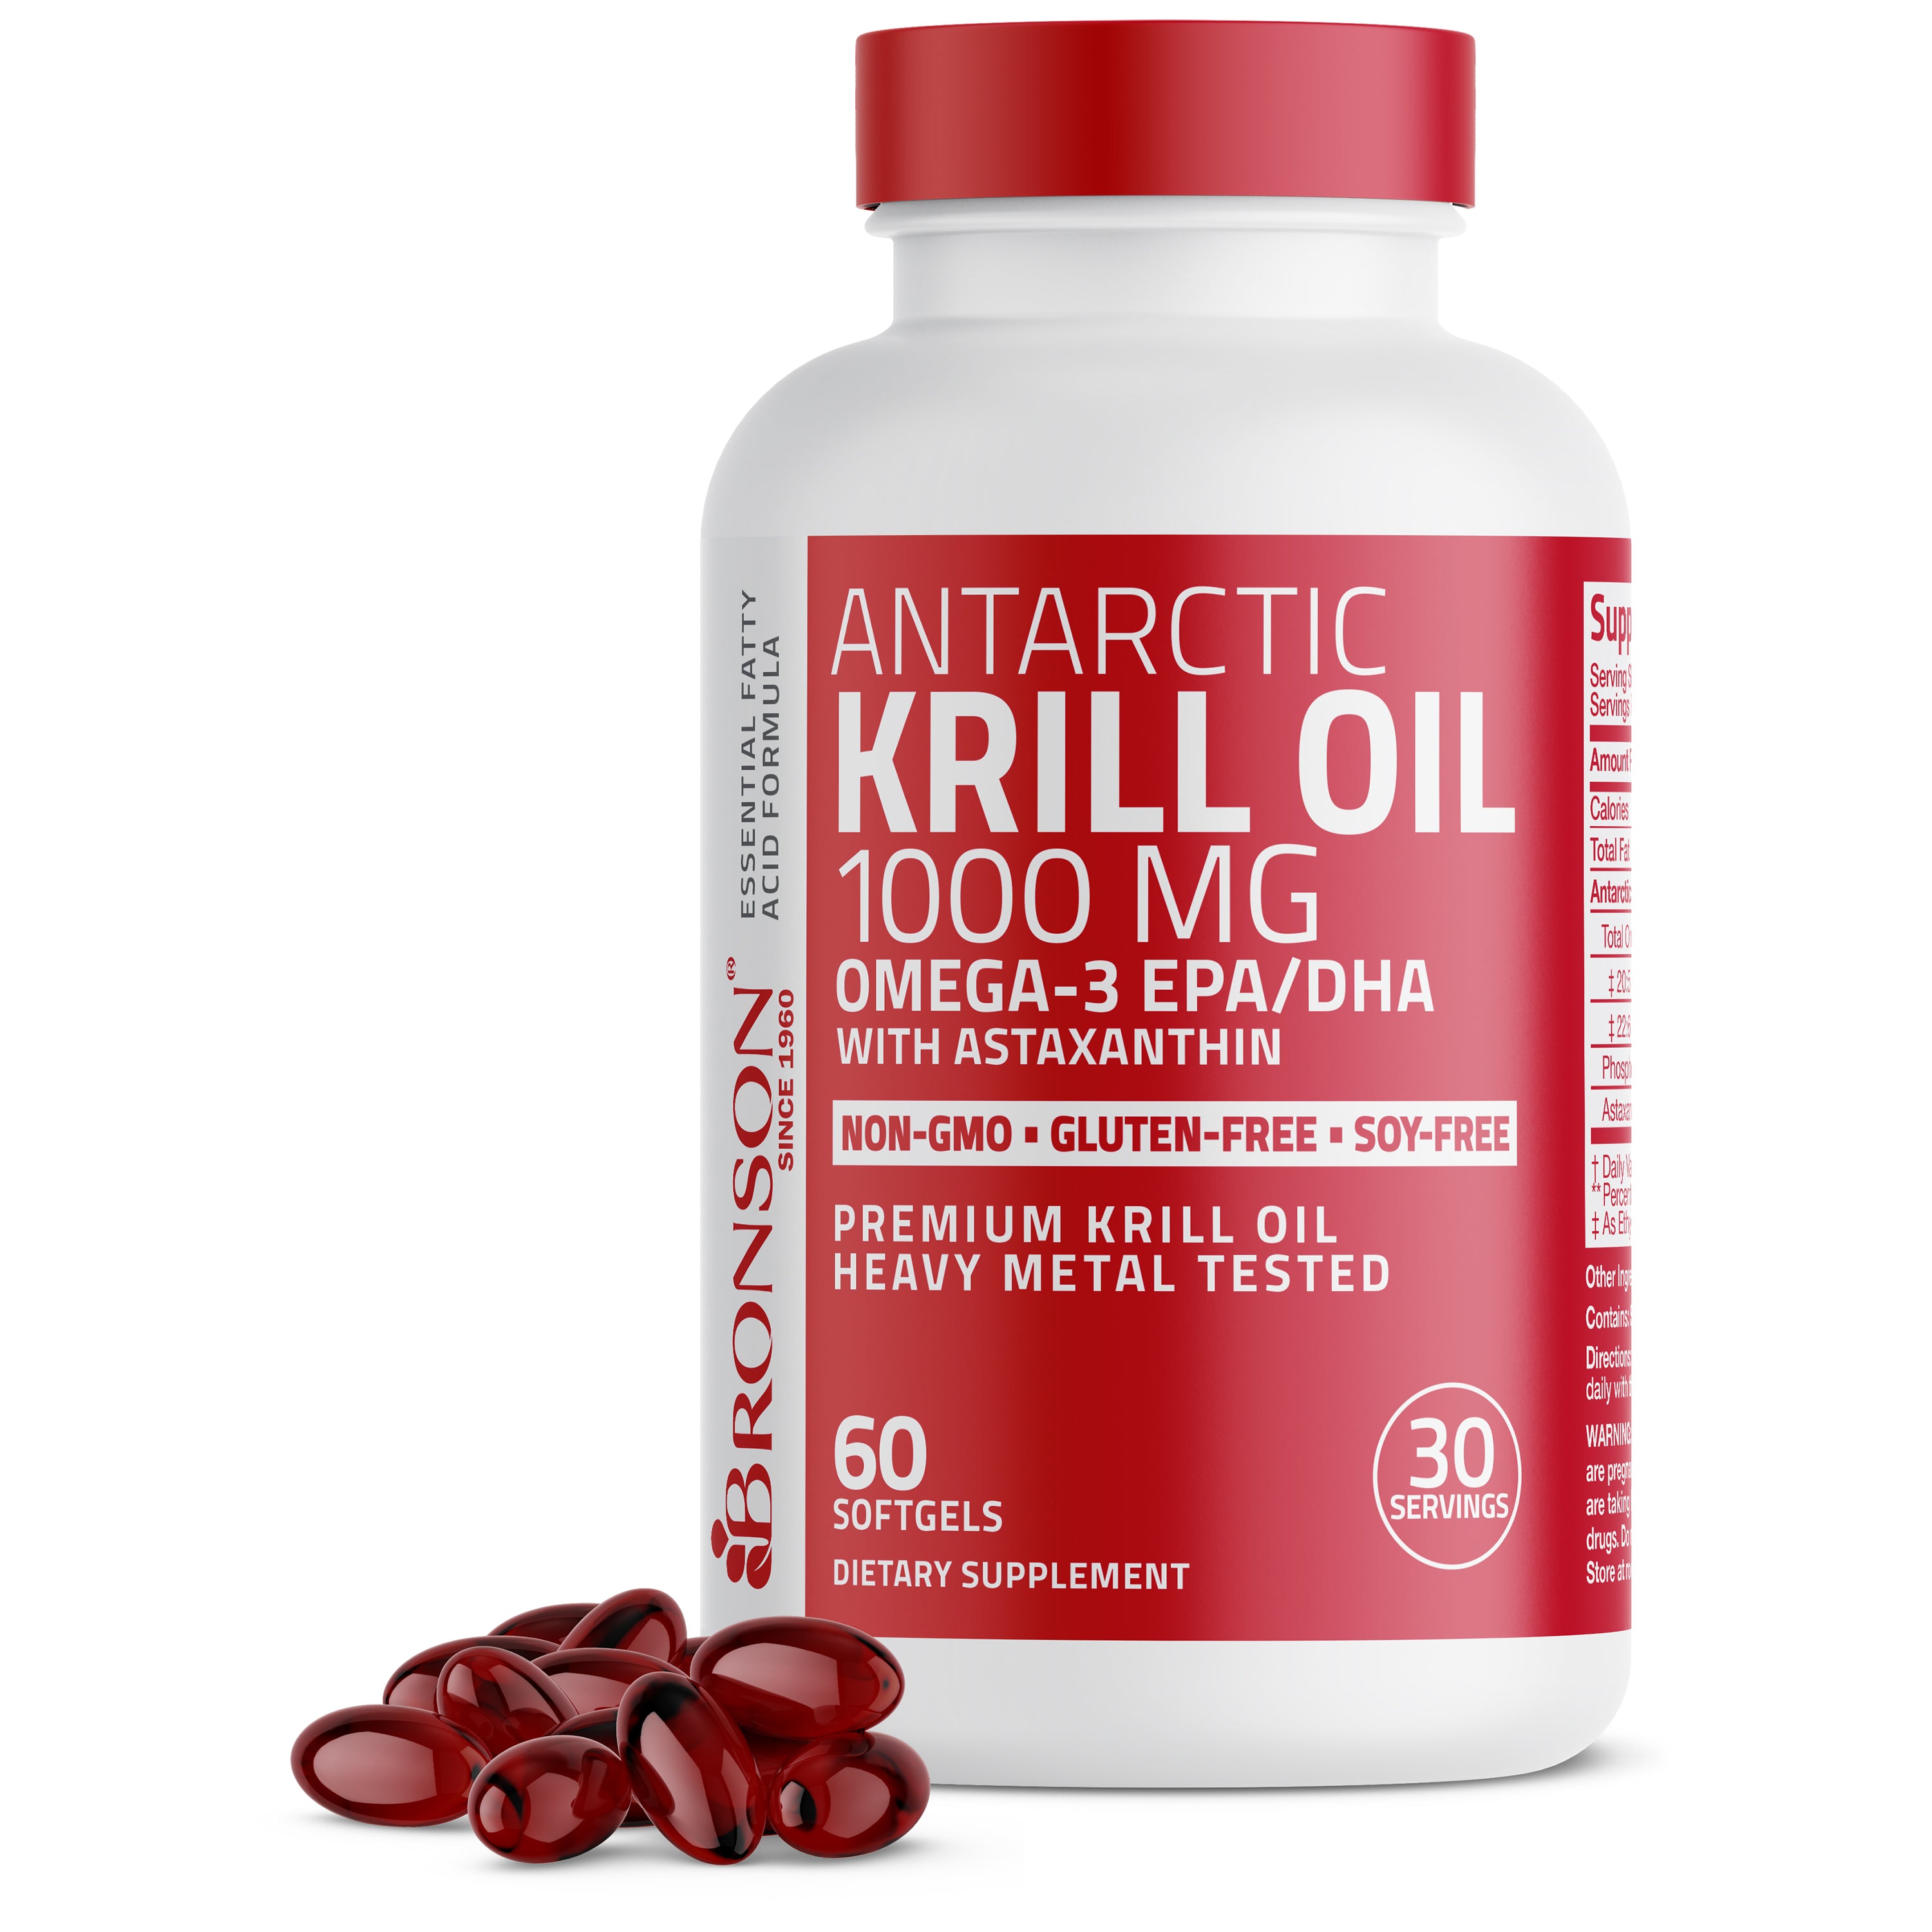 Premium Antarctic Krill Oil Omega-3 EPA DHA Non-GMO - 1,000 mg view 1 of 6